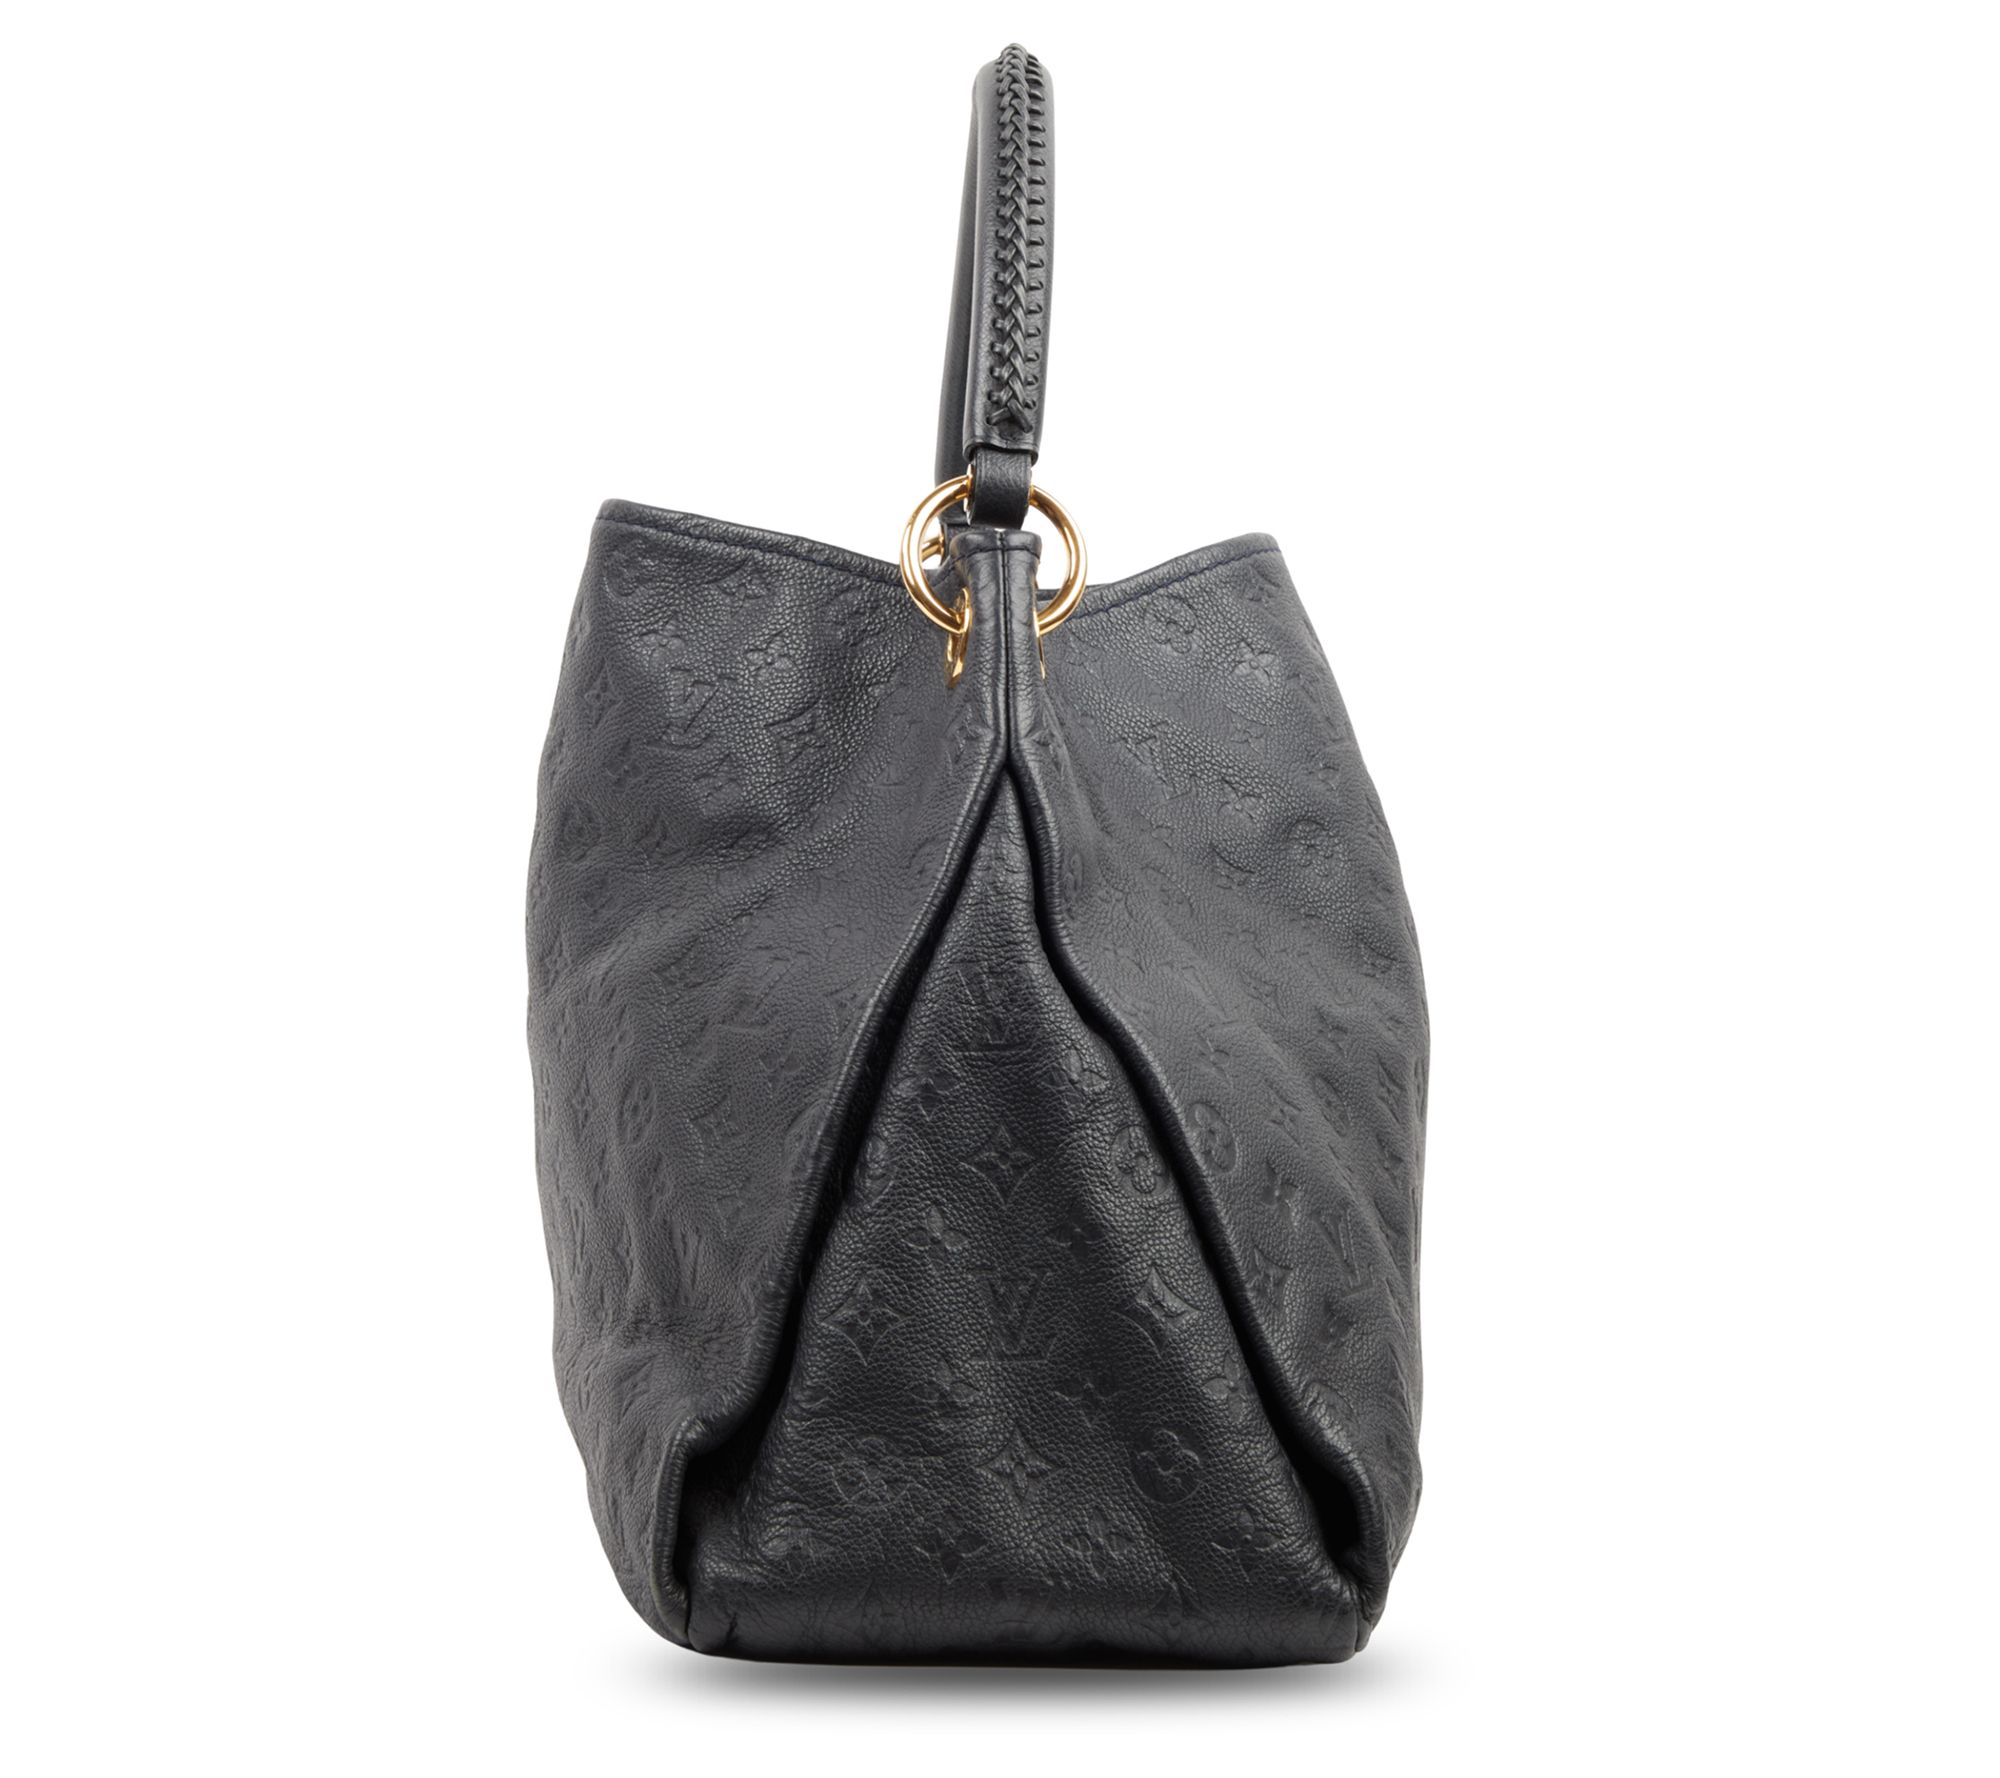 Louis Vuitton Artsy Handbag in White Leather Louis Vuitton | The Luxury  Closet